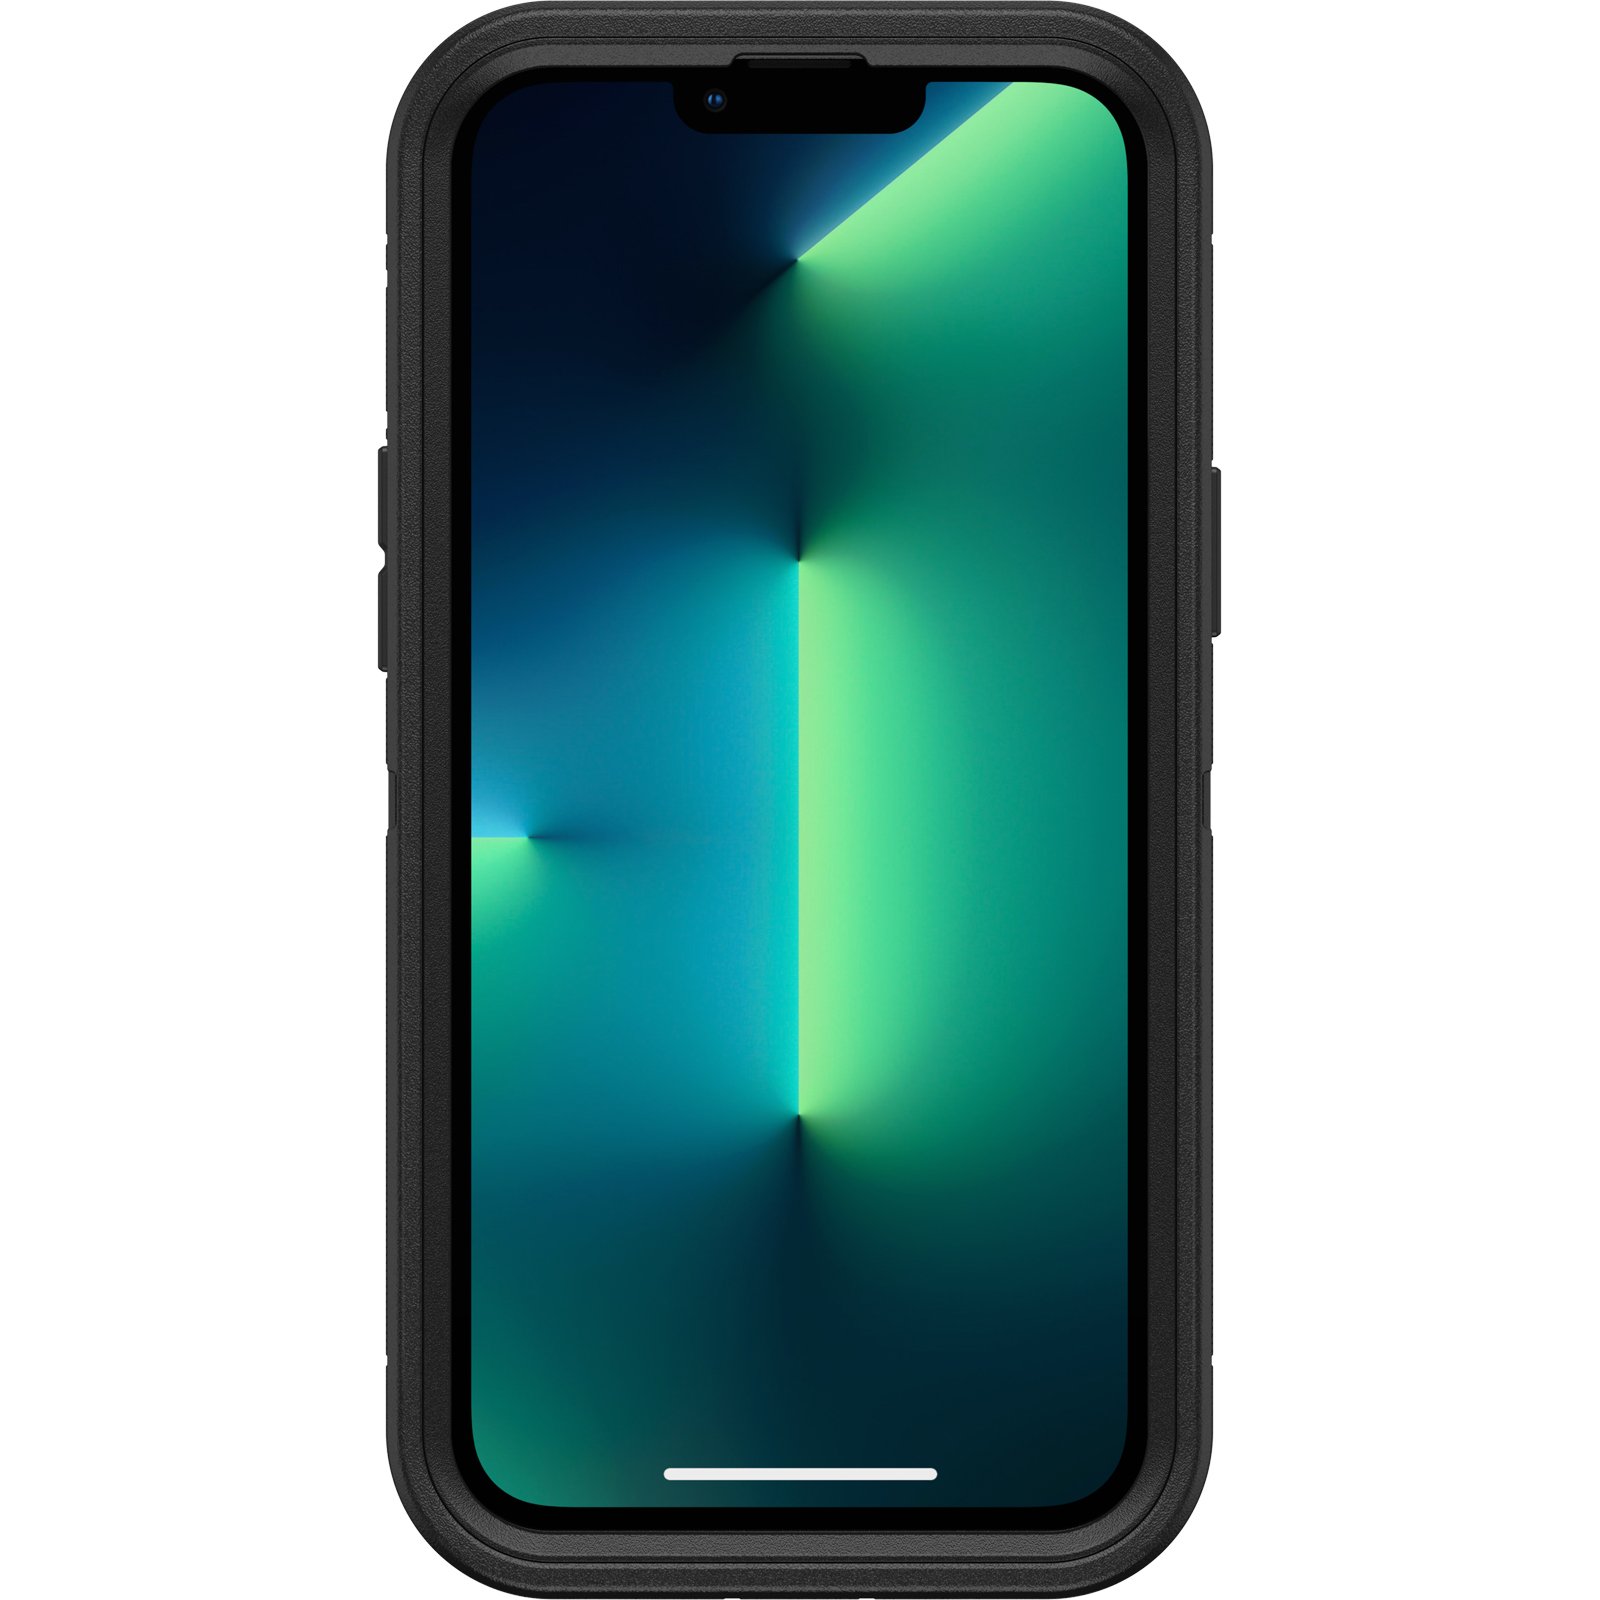 OtterBox iPhone 13 Pro Max Defender Series Case - Black, 1 ct - Kroger